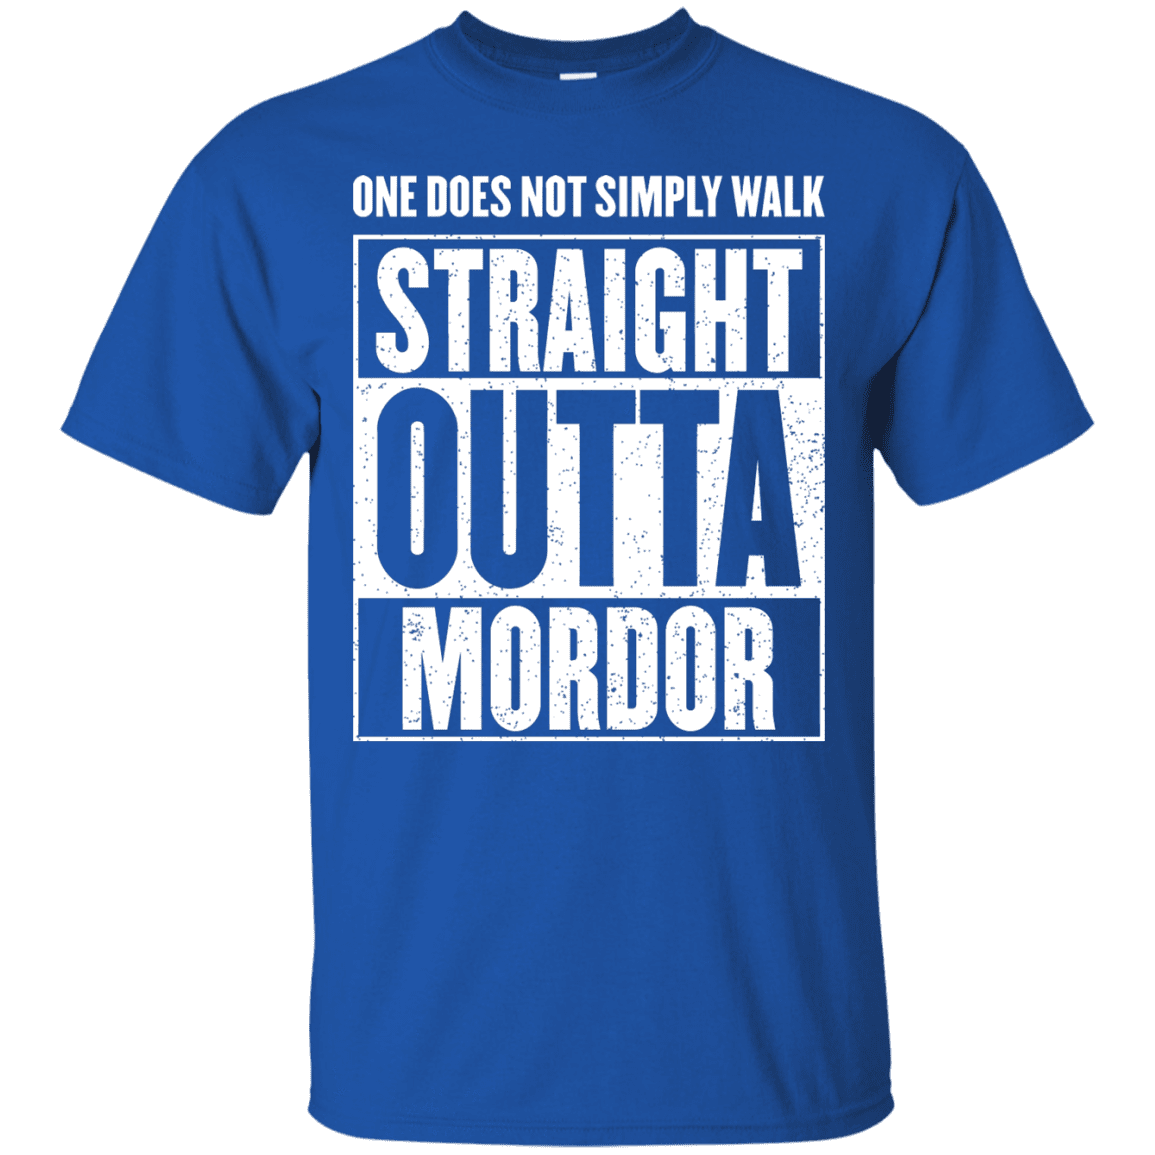 T-Shirts Royal / S Straight Outta Mordor T-Shirt